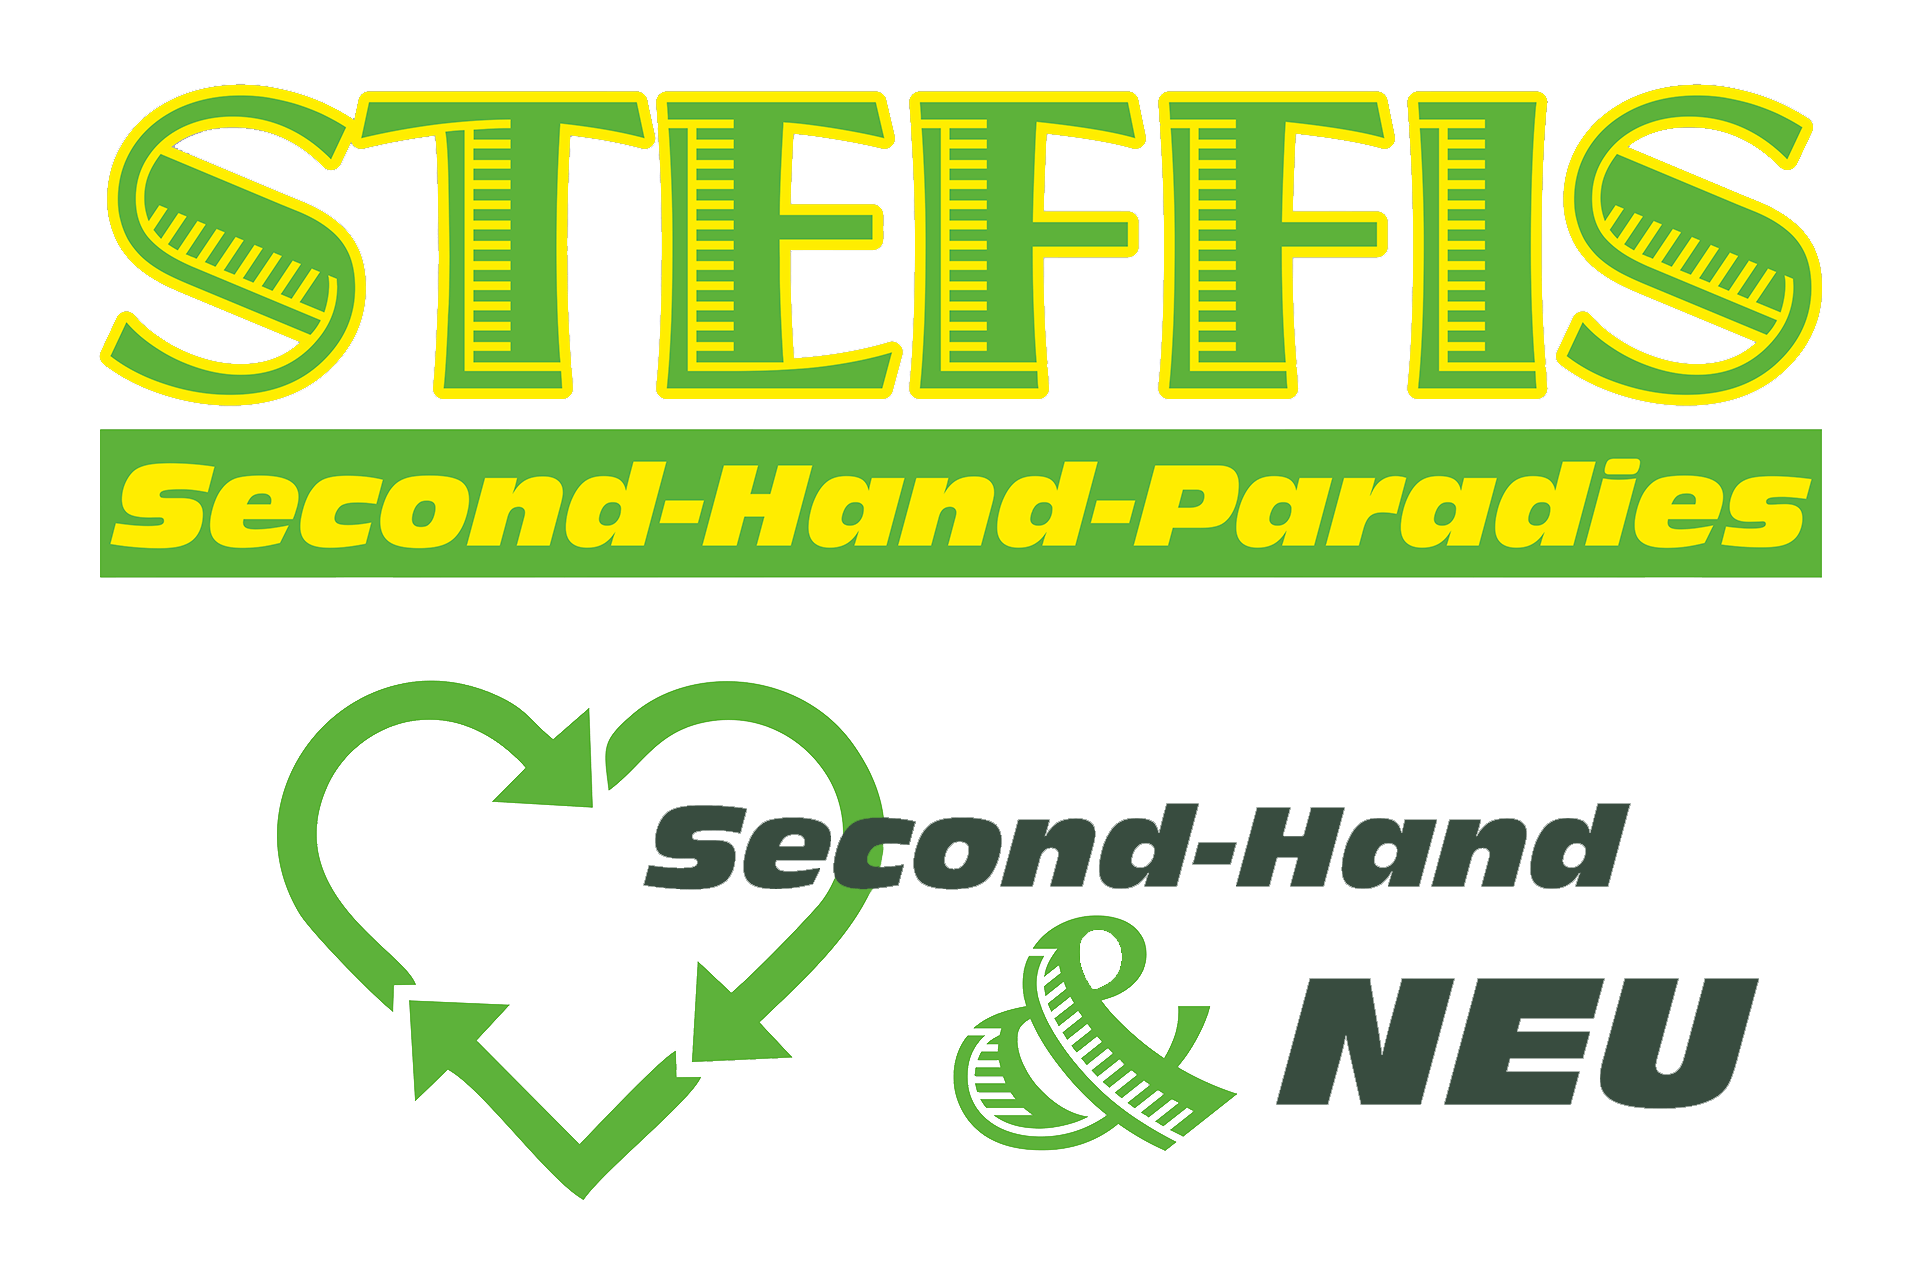 Steffis Second-Hand-Shop Logo